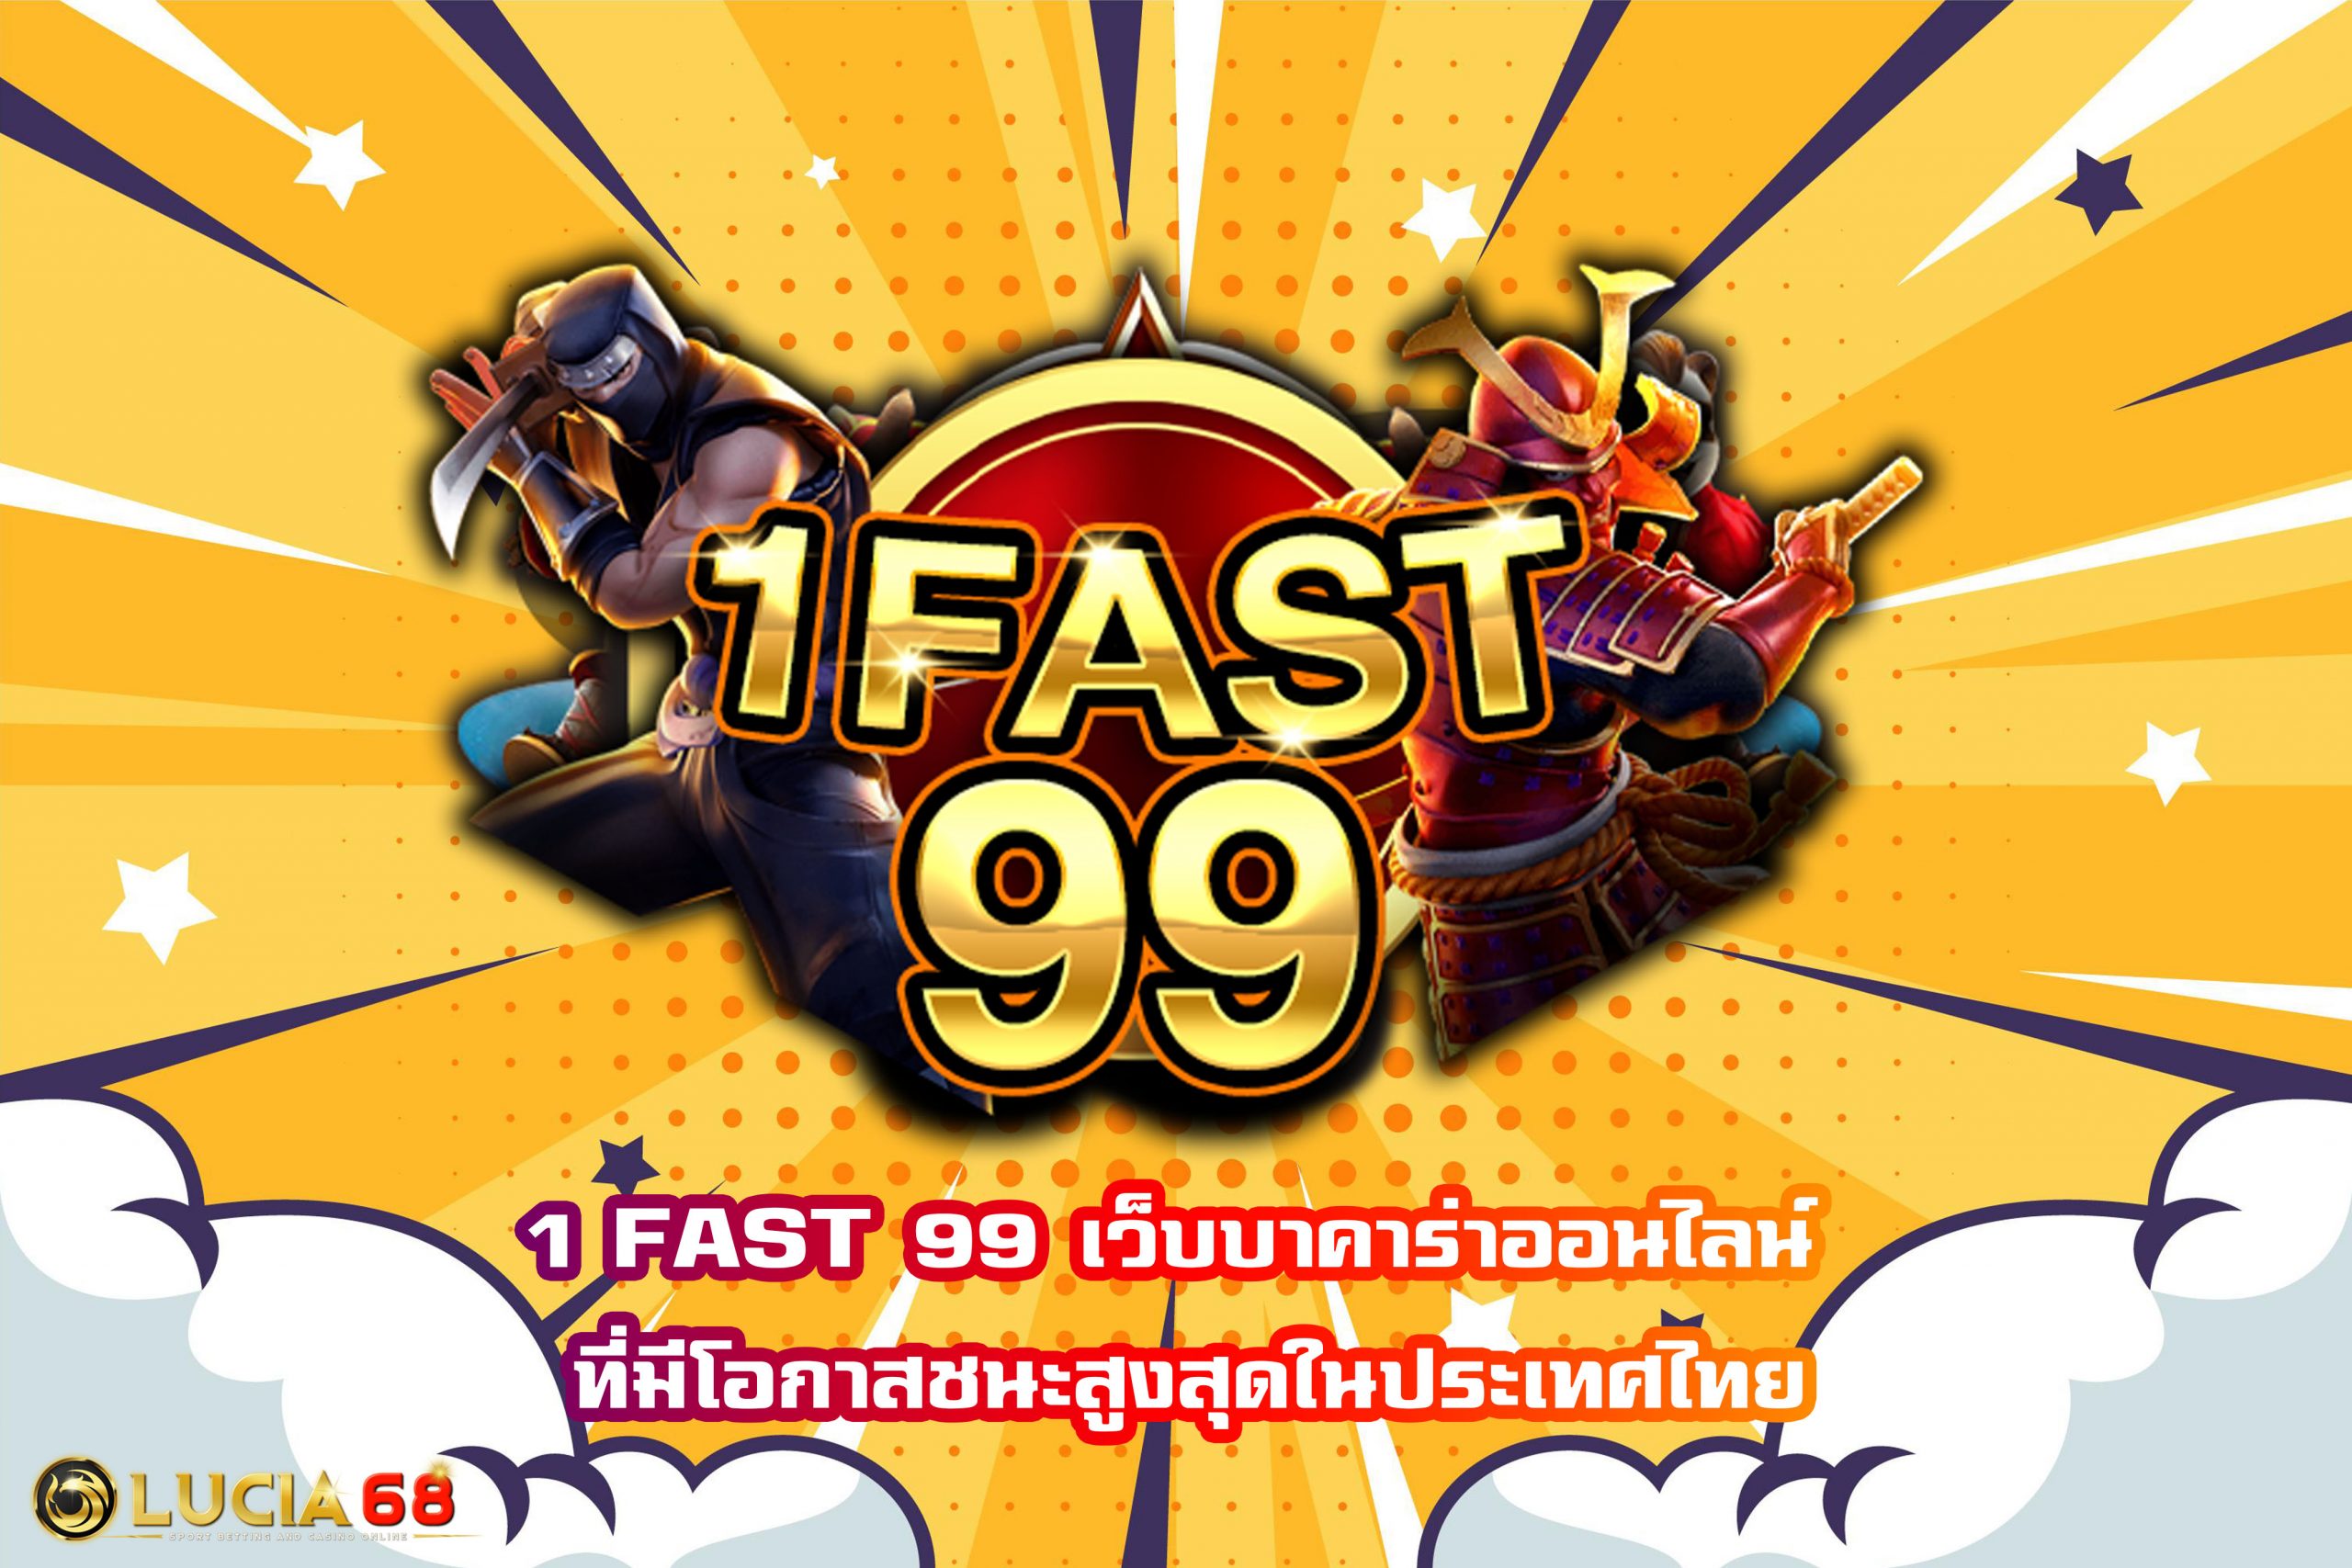 1 FAST 99 เว็บบาคาร่าออนไลน์ ที่มีโอกาสชนะสูงสุดในประเทศไทย